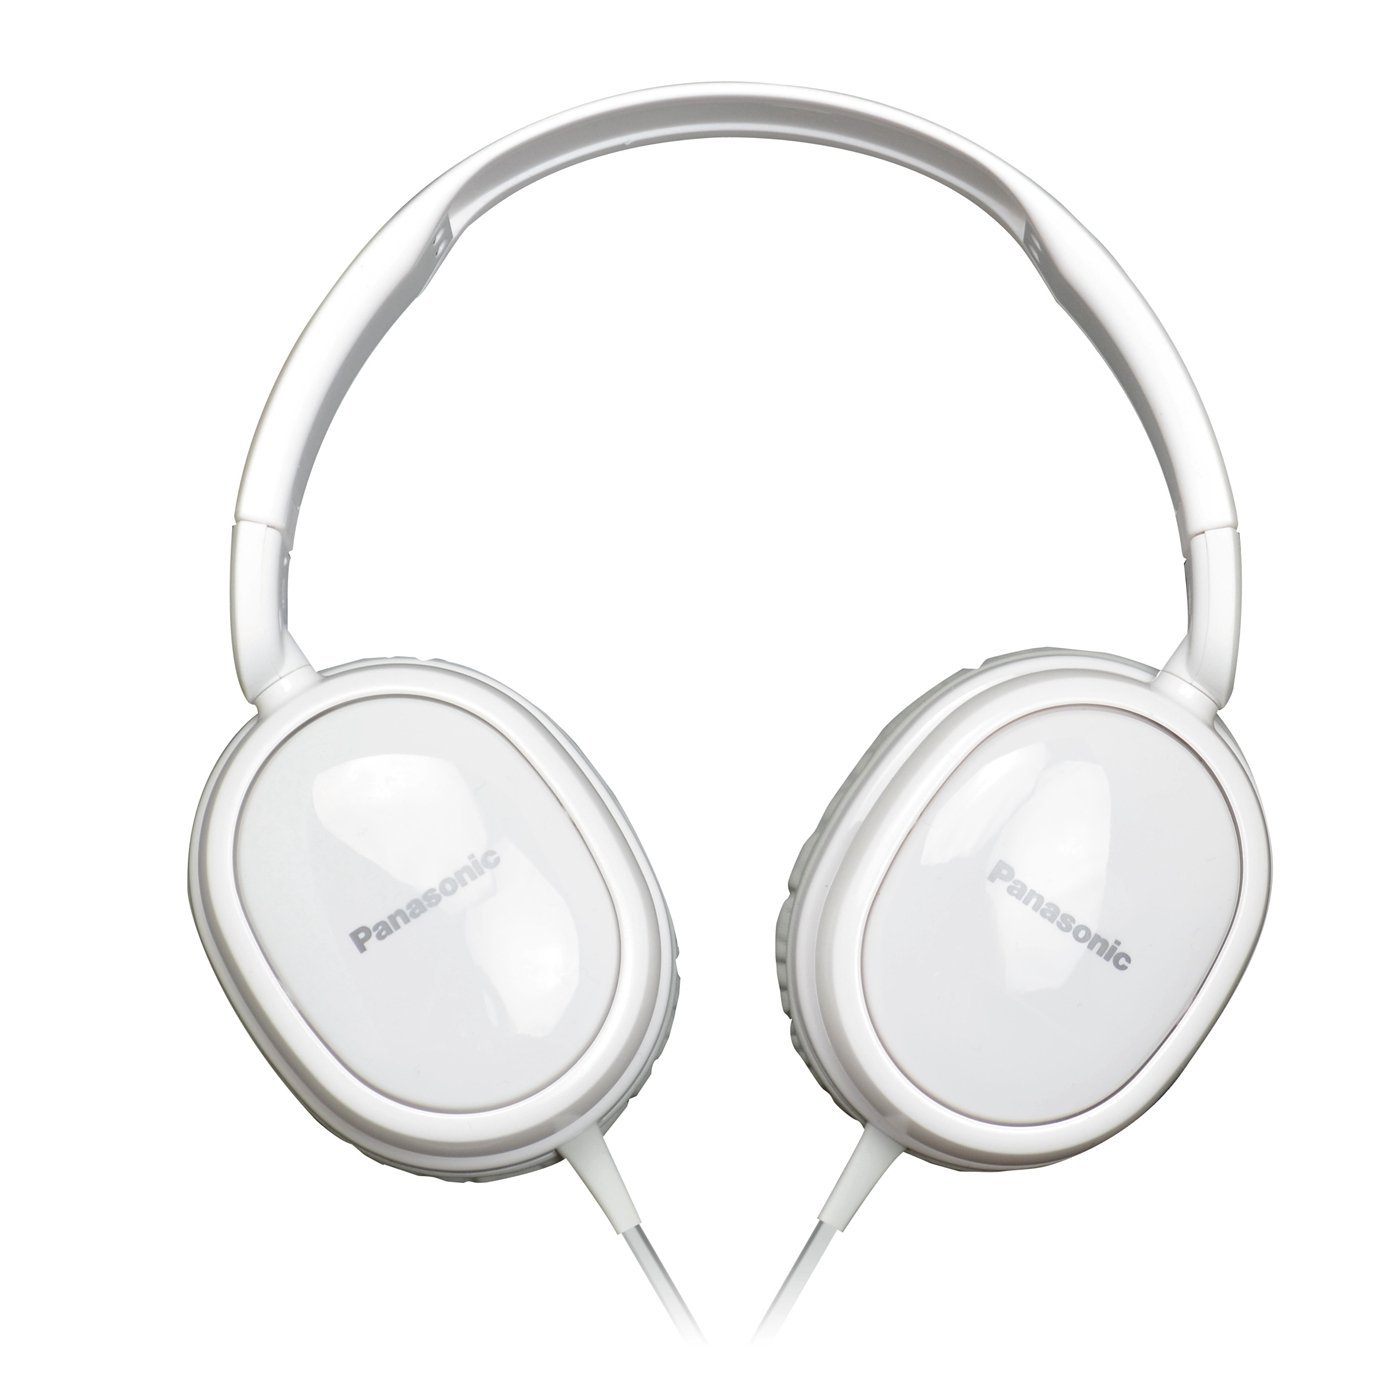 Panasonic Headphone RP-HX250ME-W At Rs 650 Only - Amazon